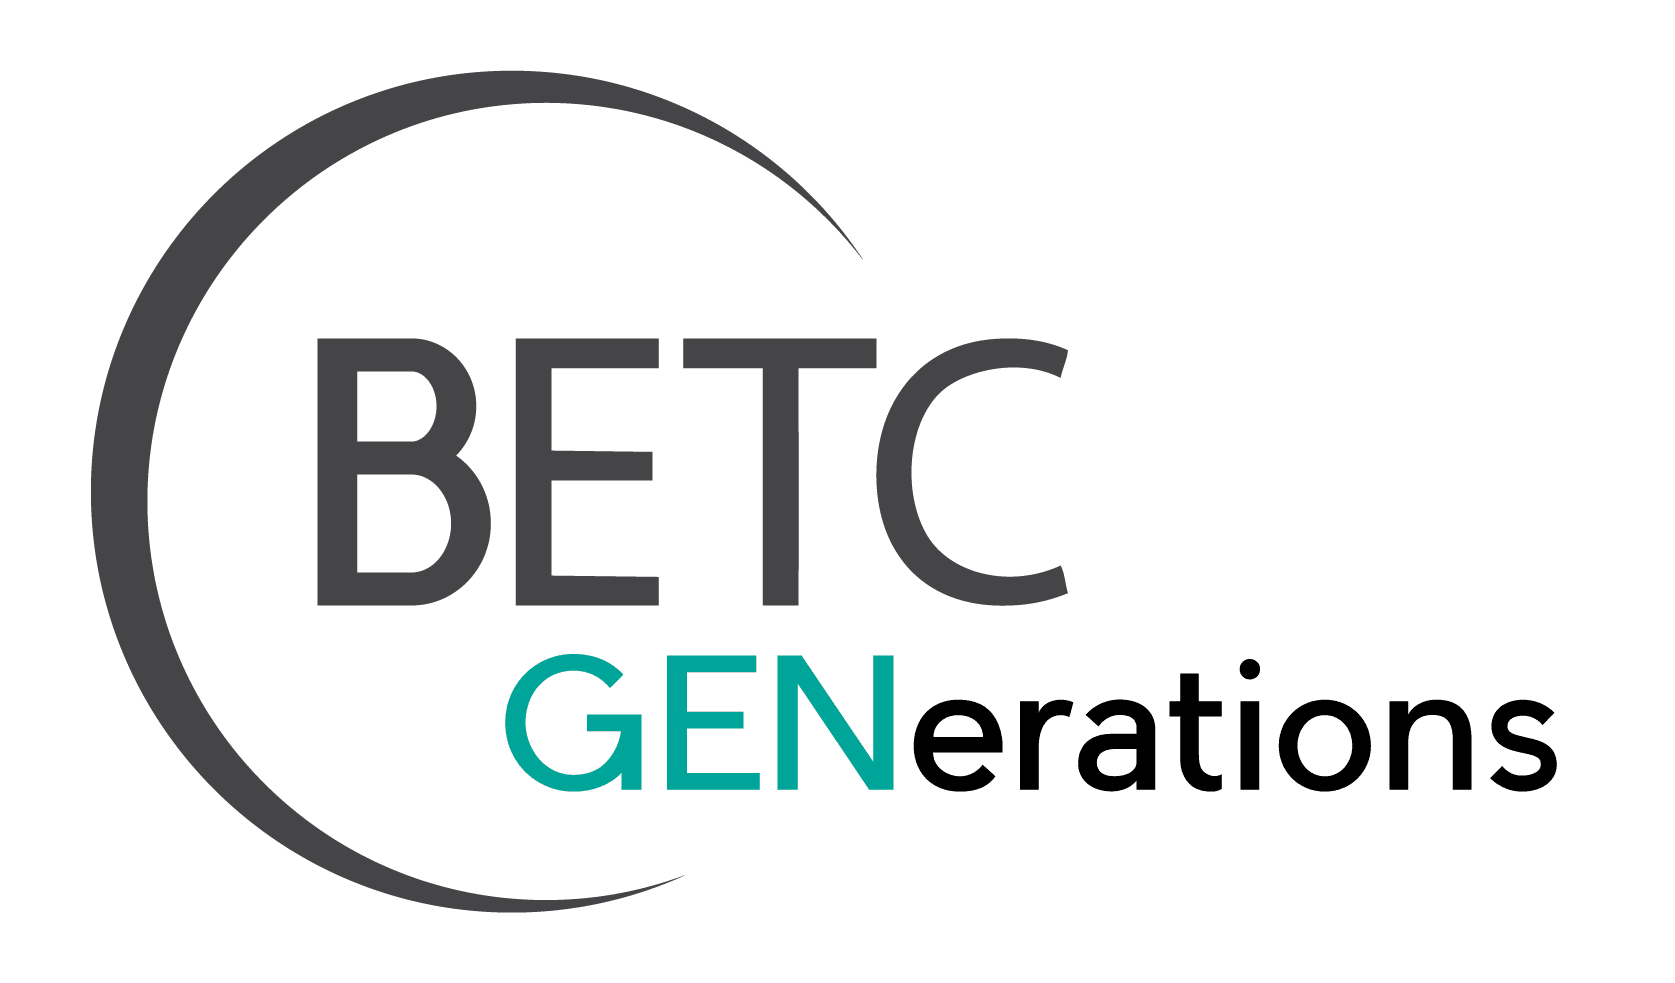 BETC GENerations Logo.png